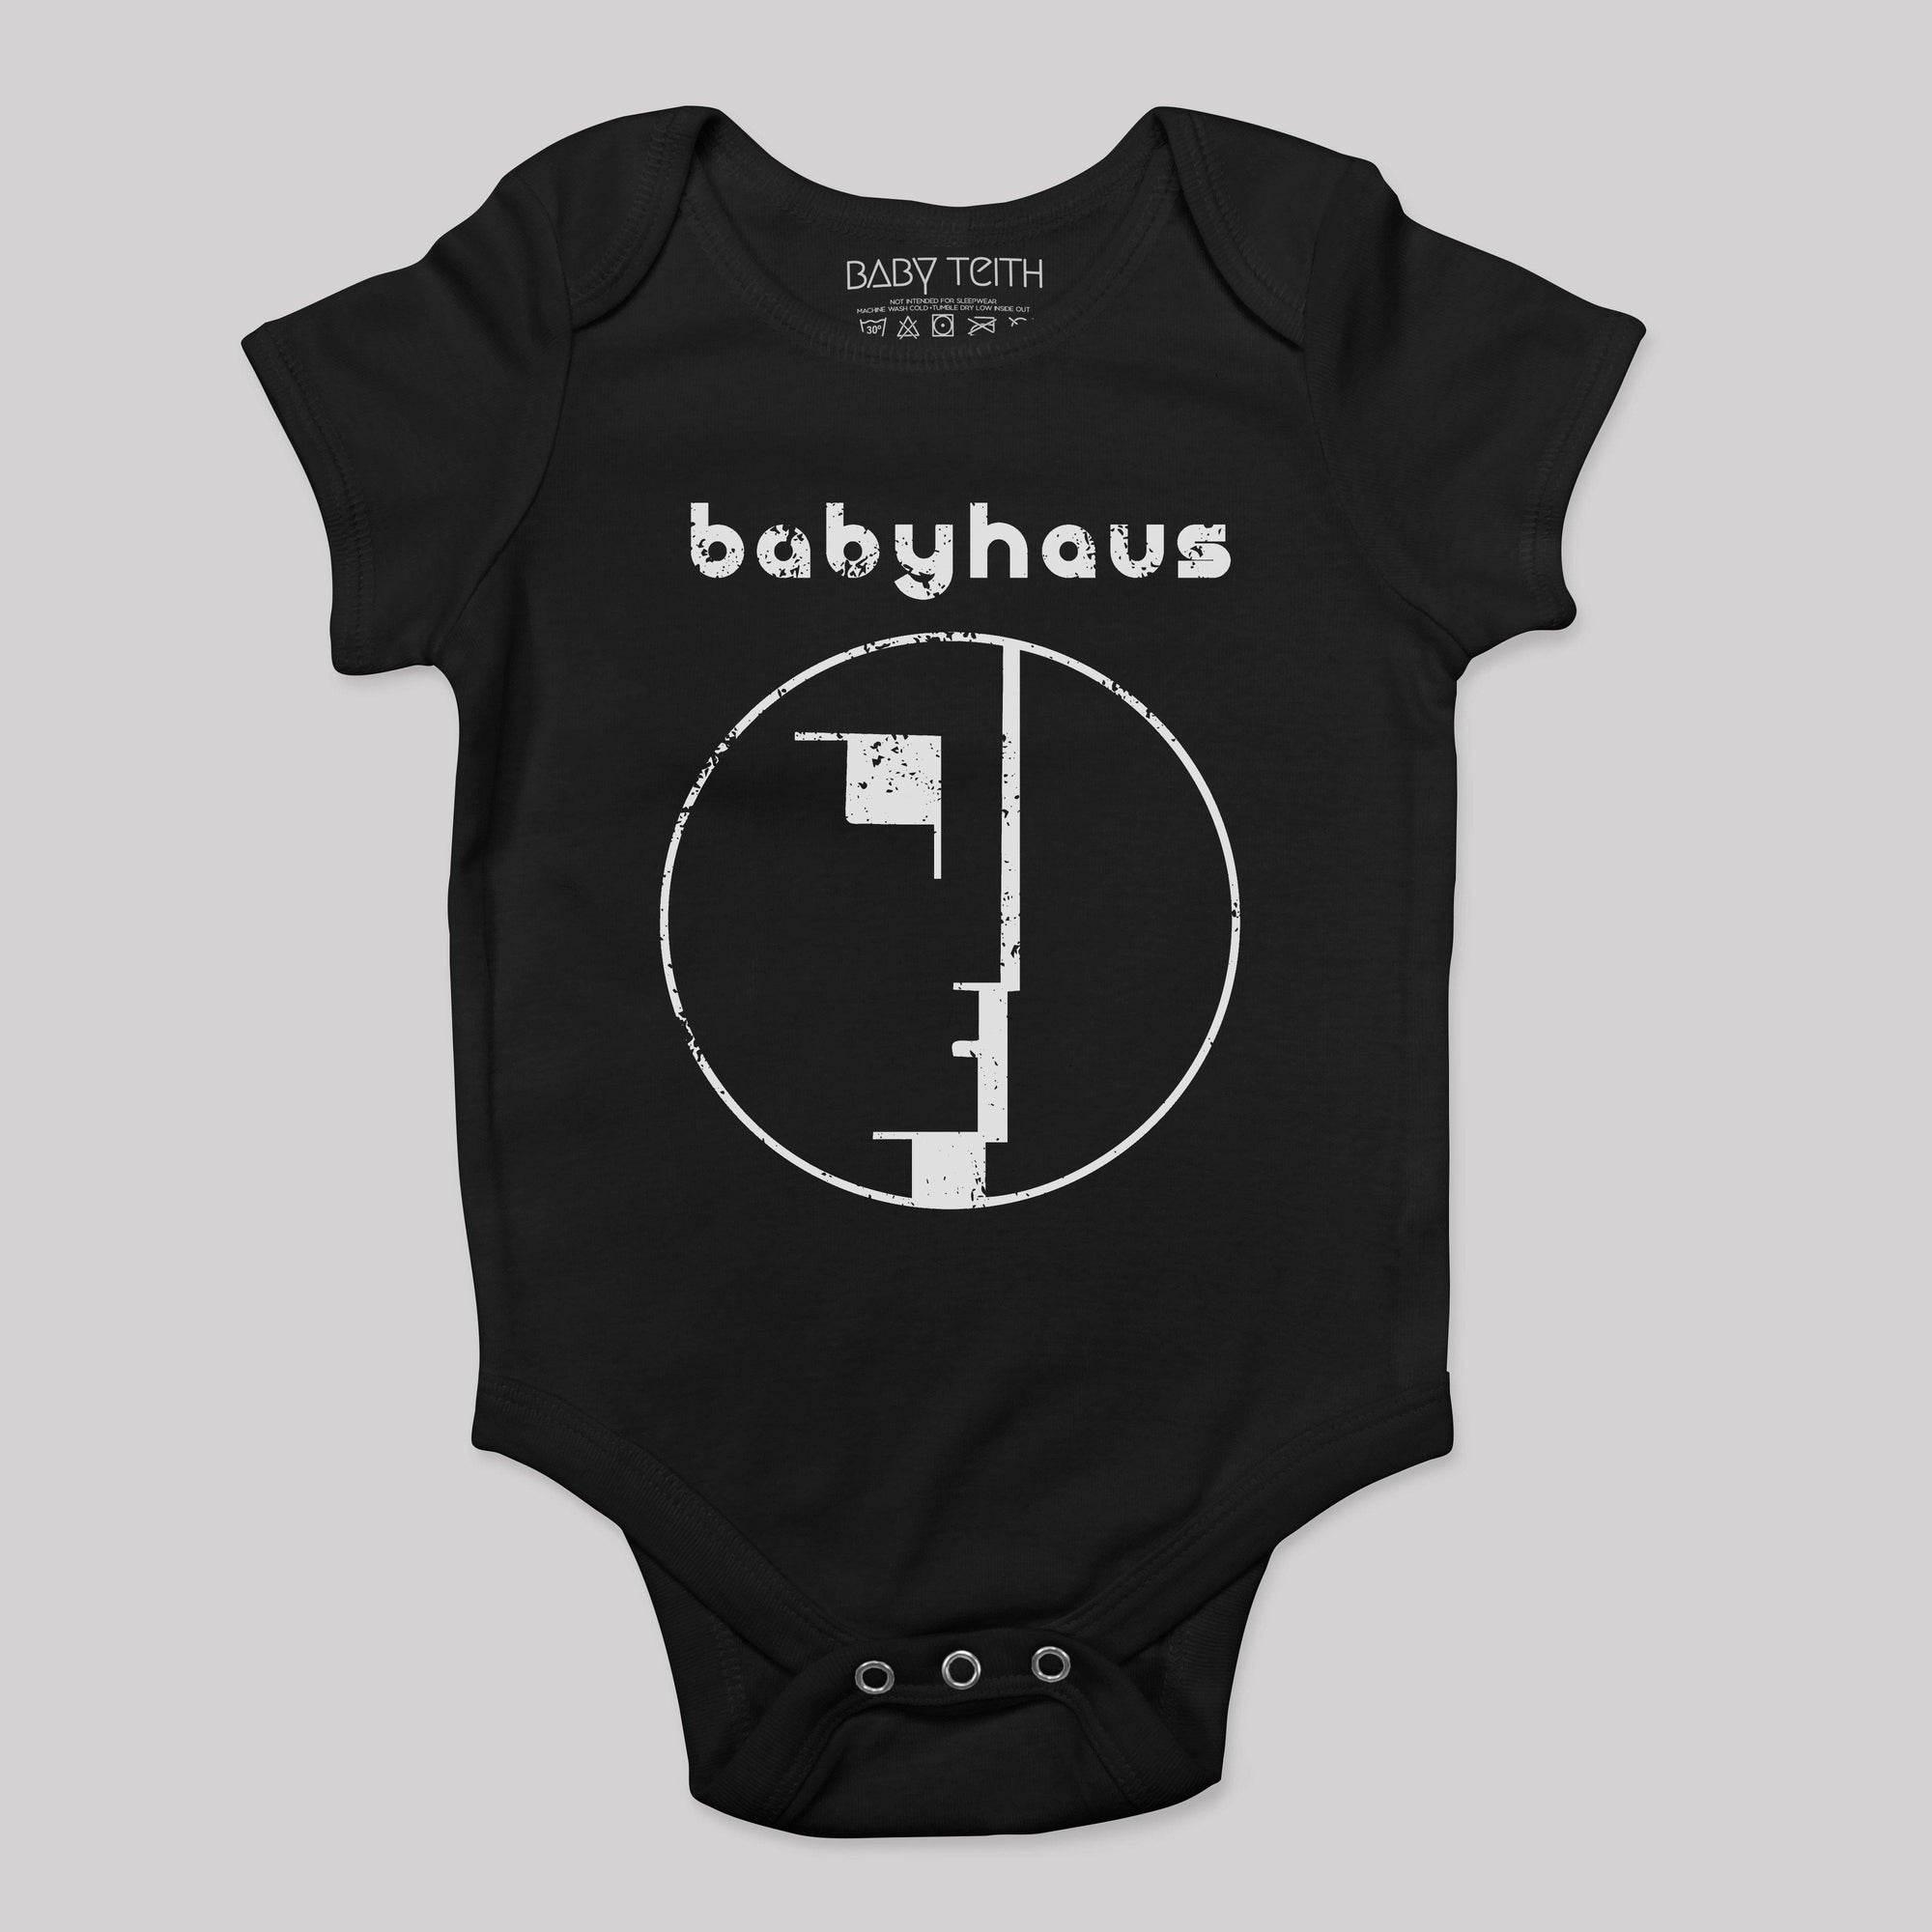 "BabyHaus" Baby Bodysuit Inspired by Bauhaus - Baby Teith